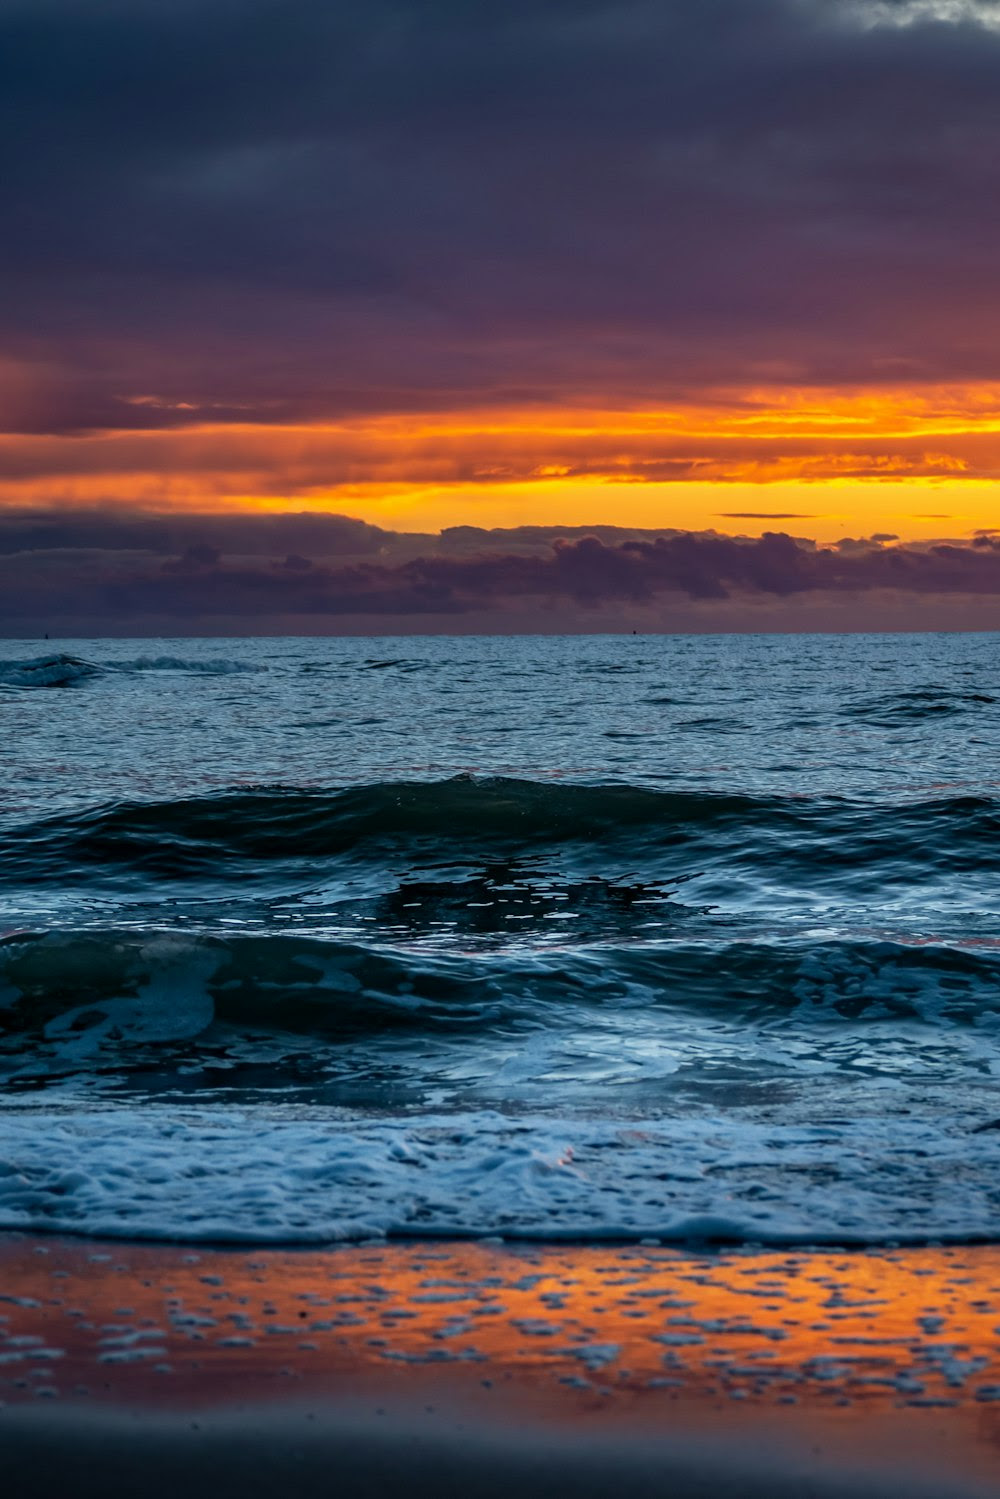 ocean waves under orange sky during sunset